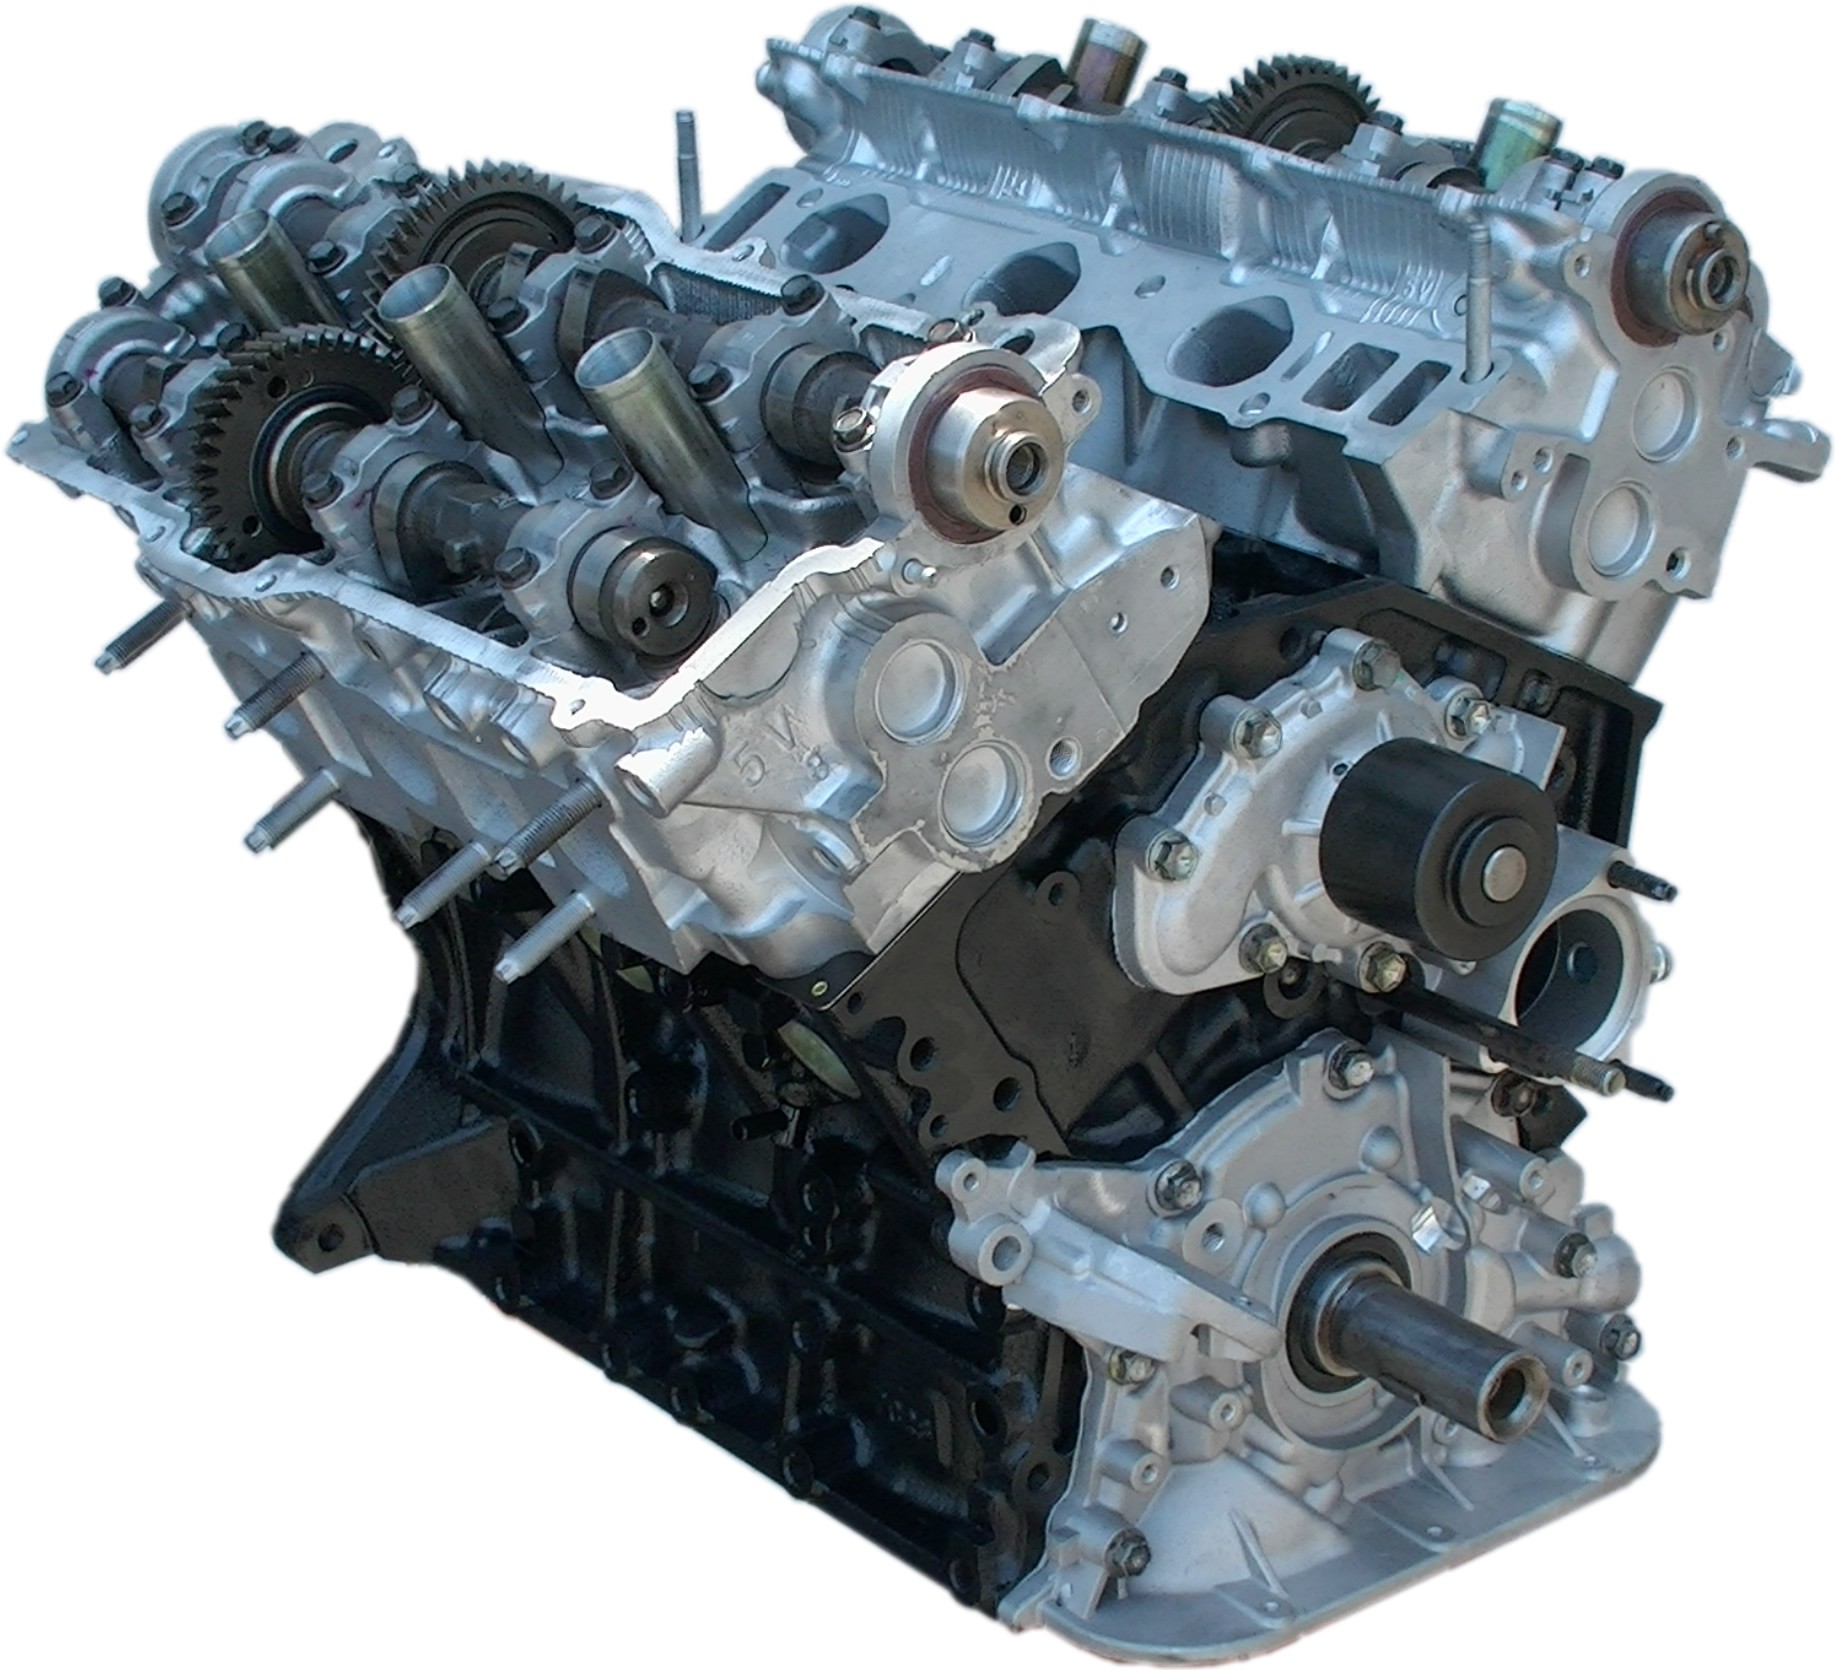 2019 Toyota Tacoma V6 Engine Specs